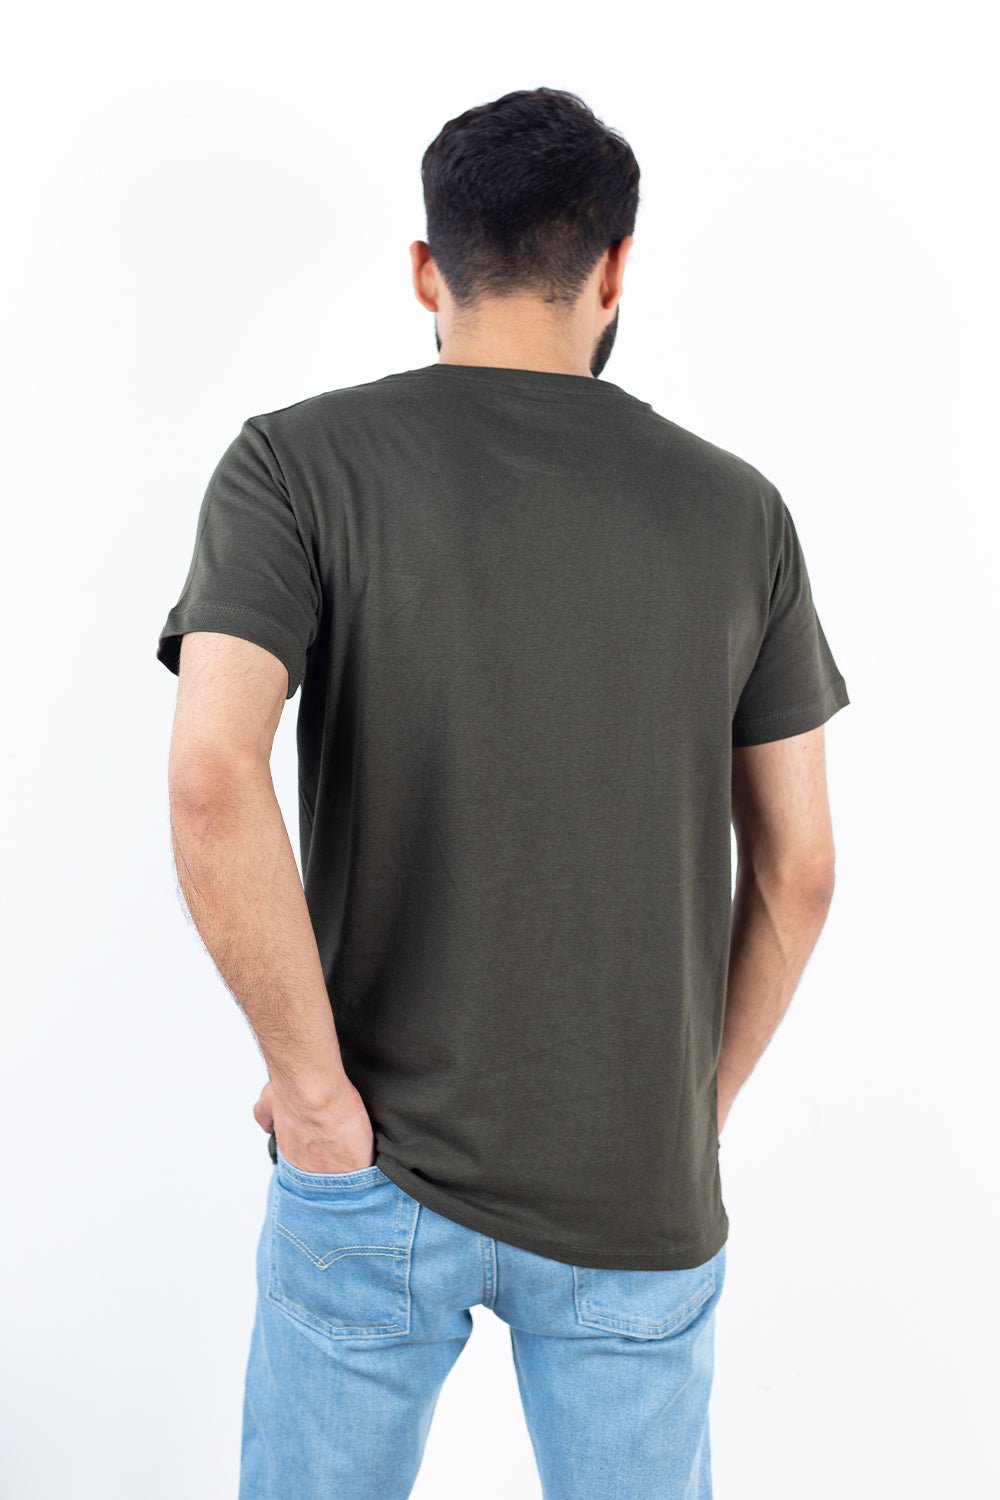 Basic Military Green Crew Neck T-Shirt - MHW Clothing